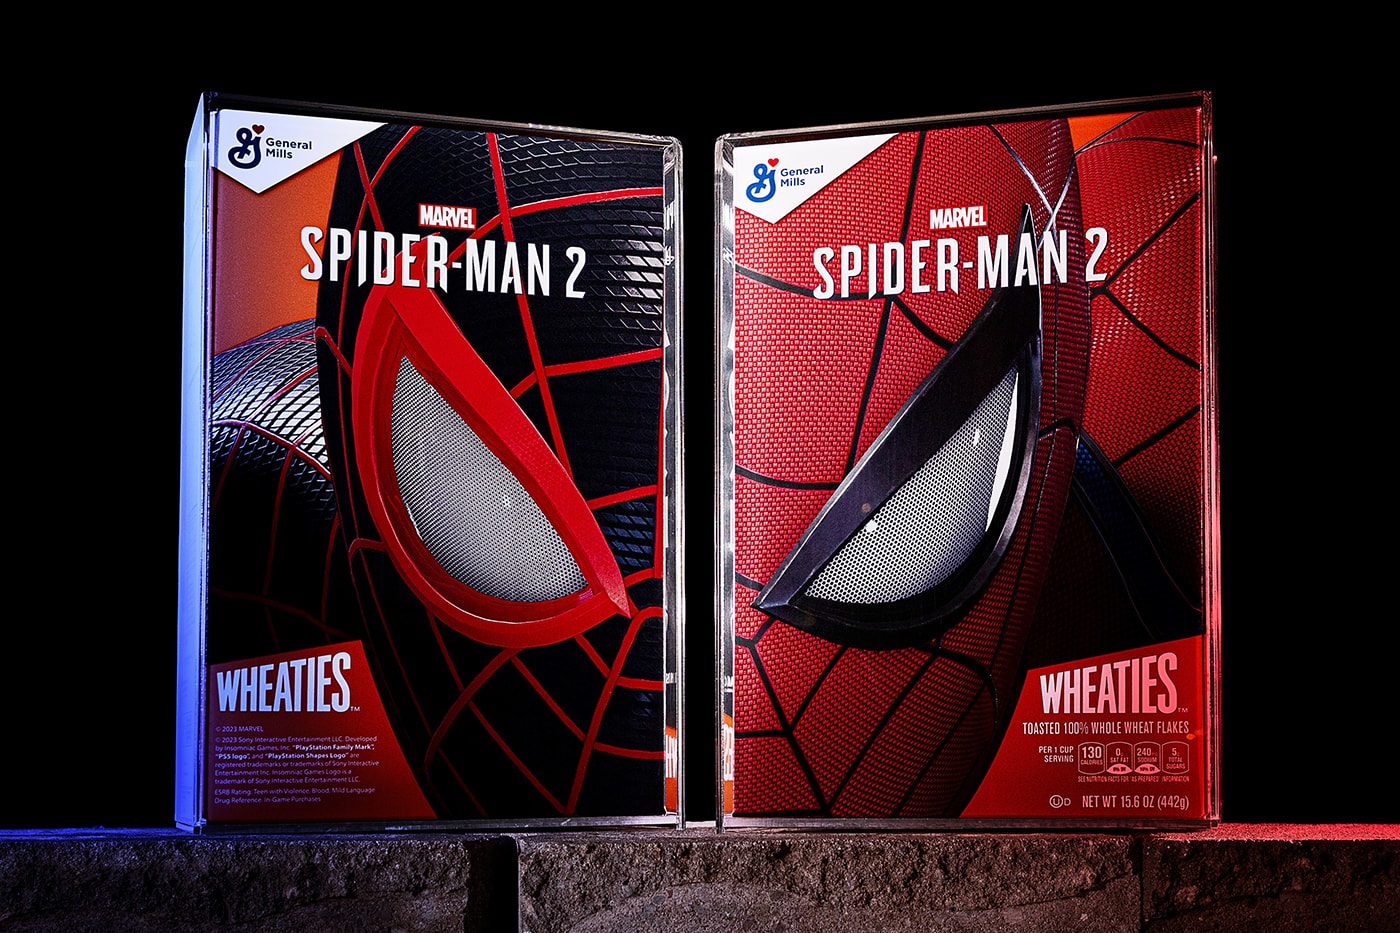 Sony Playstation x Wheaties 'Spider-Man 2' Novelty Box